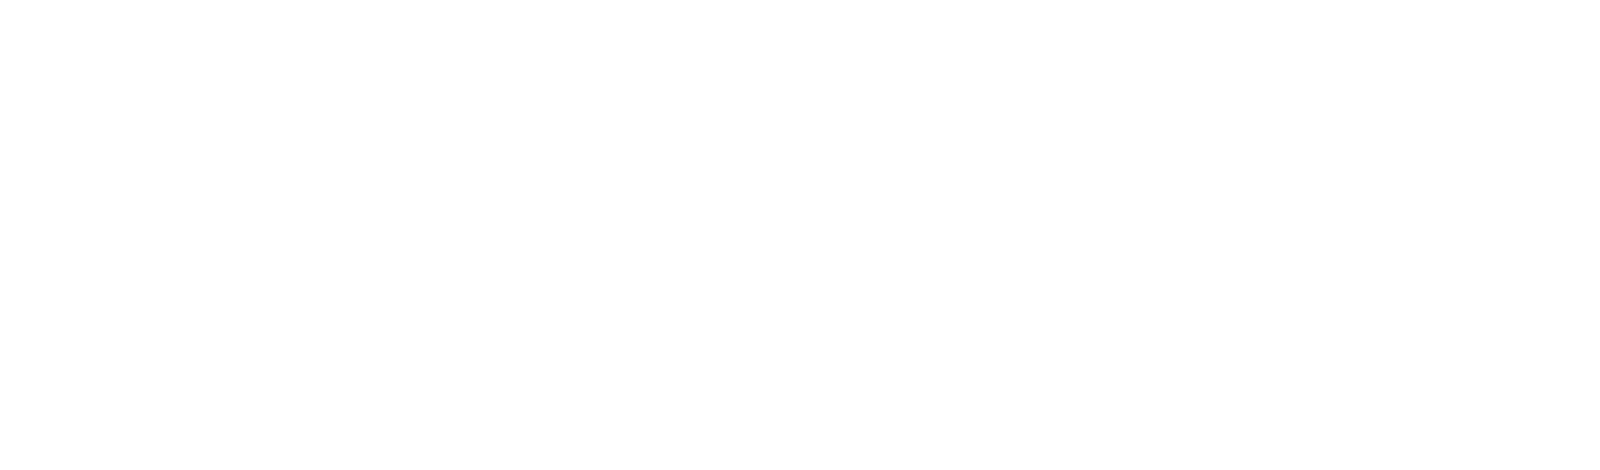 slider_titre_aquaventure-naturel